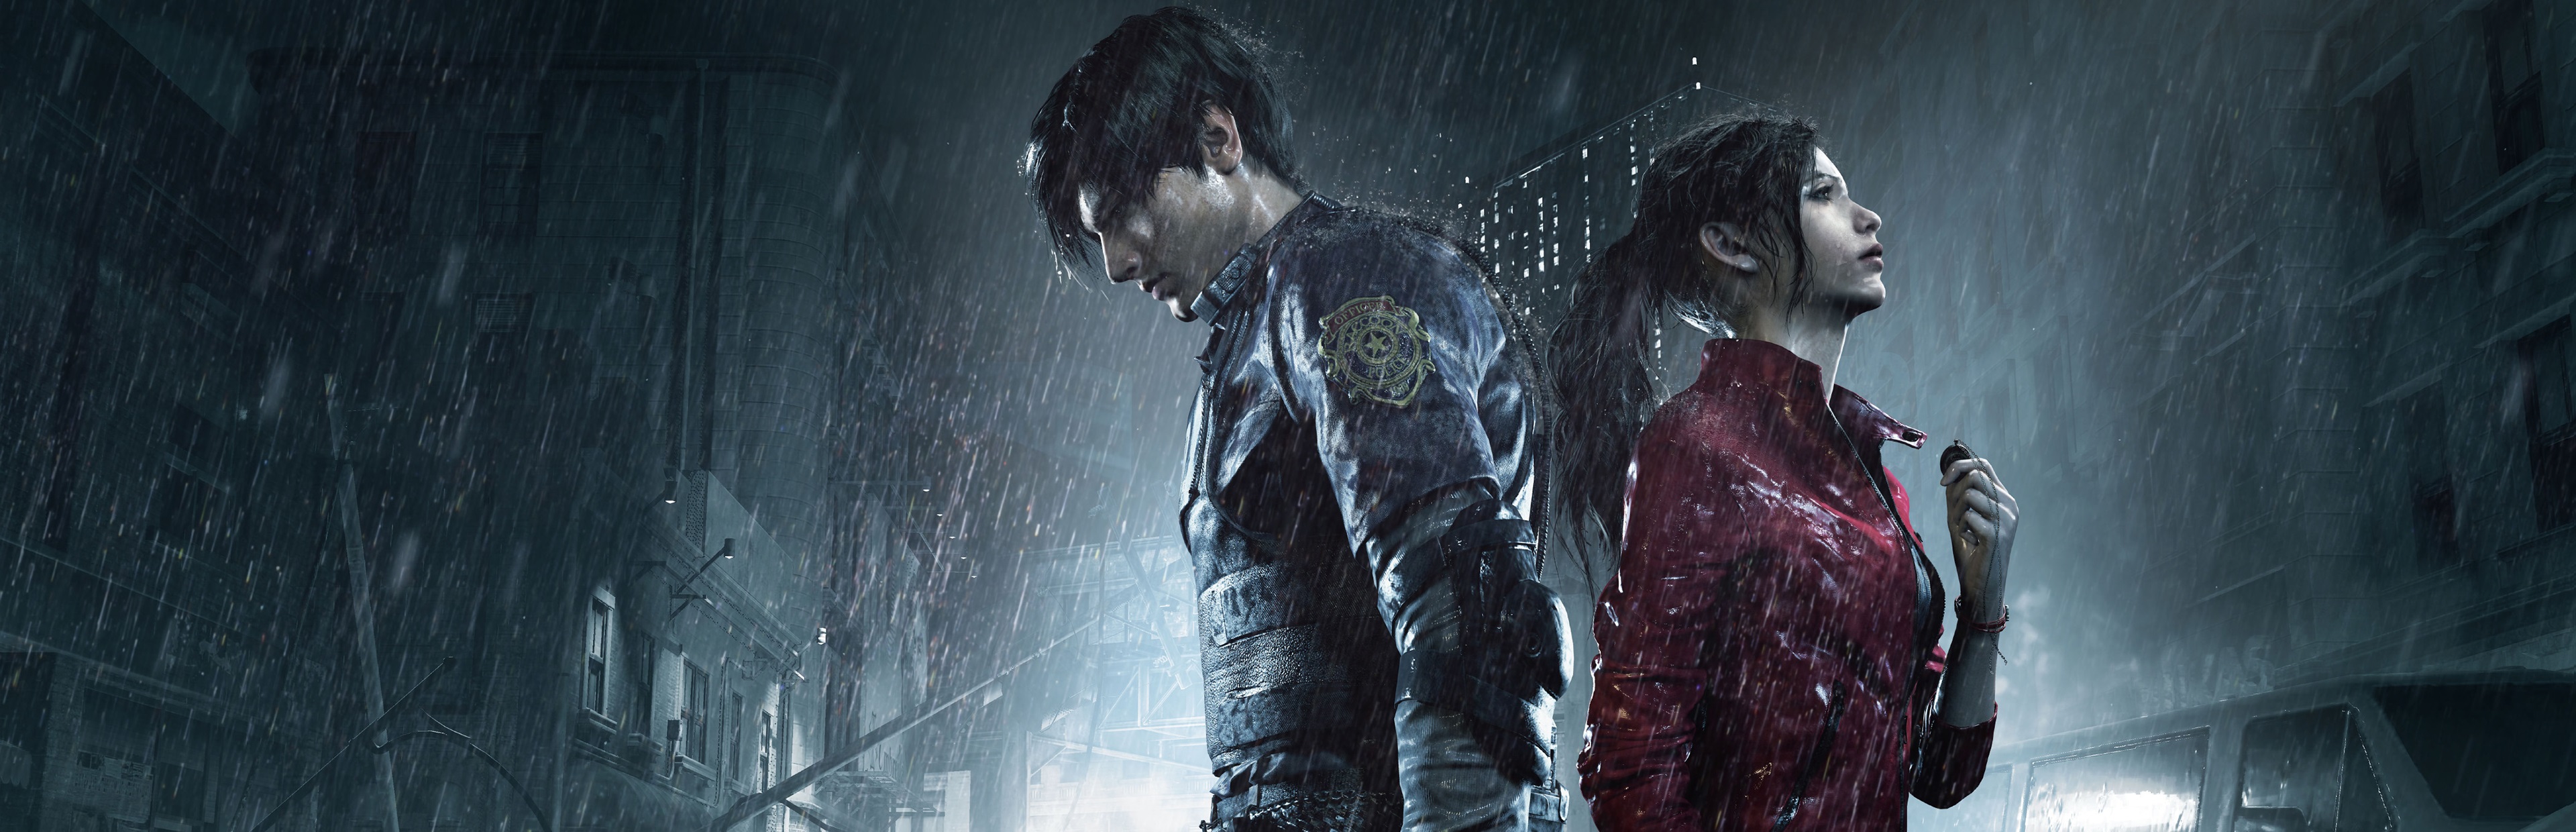 Resident Evil 2 Remake  Banner by